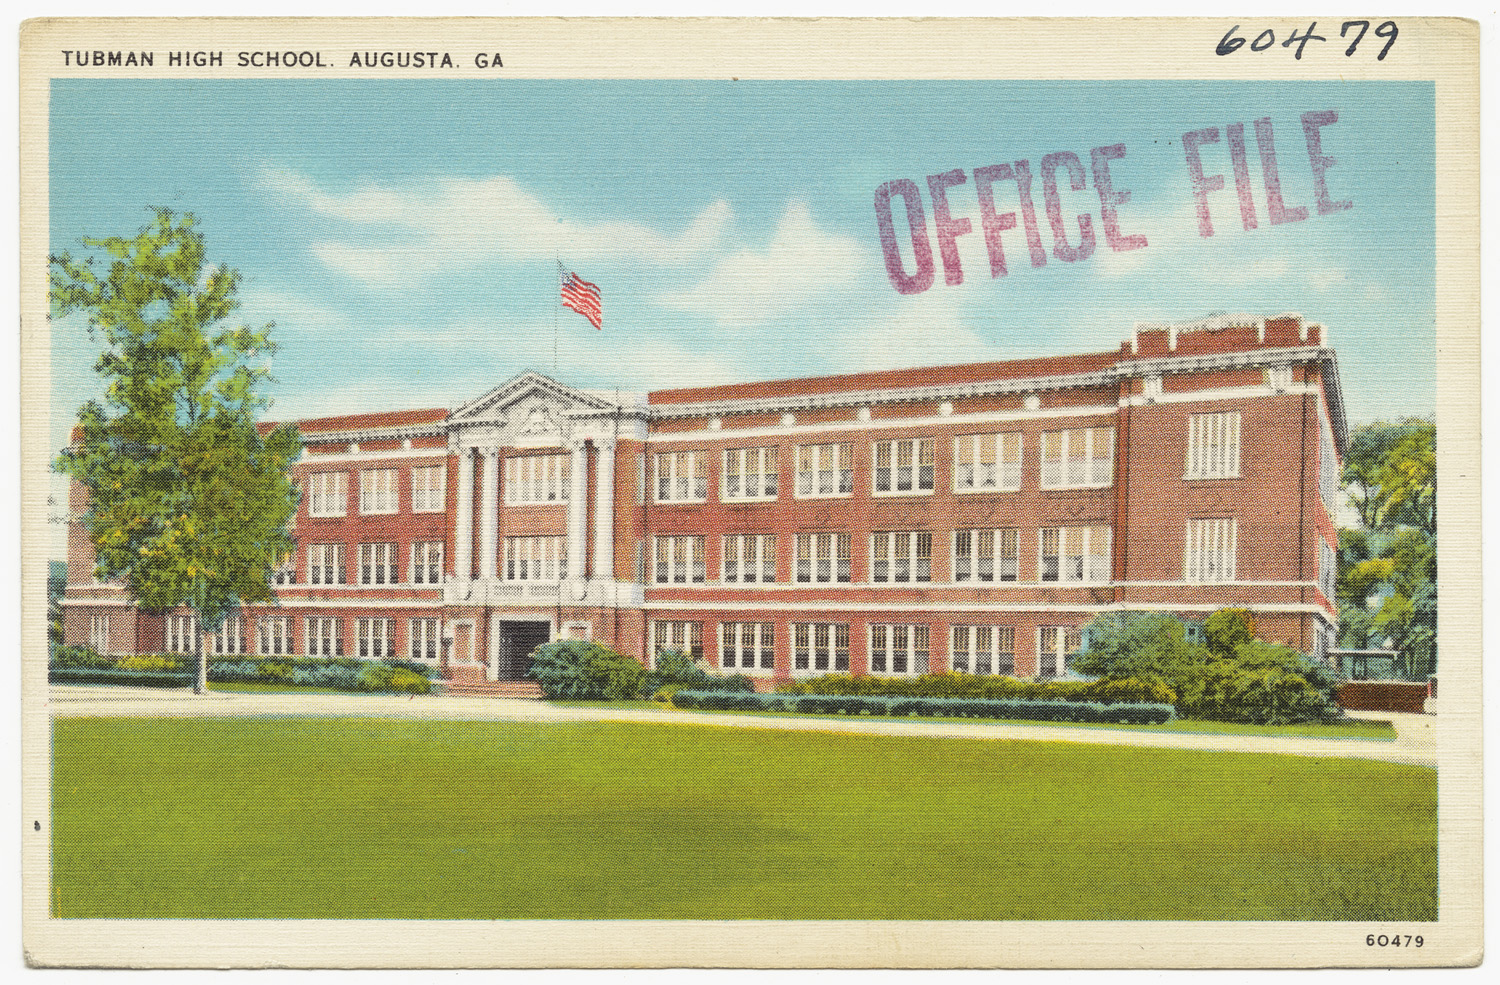 Postcard of Tubman High School. Source: Boston Public Library